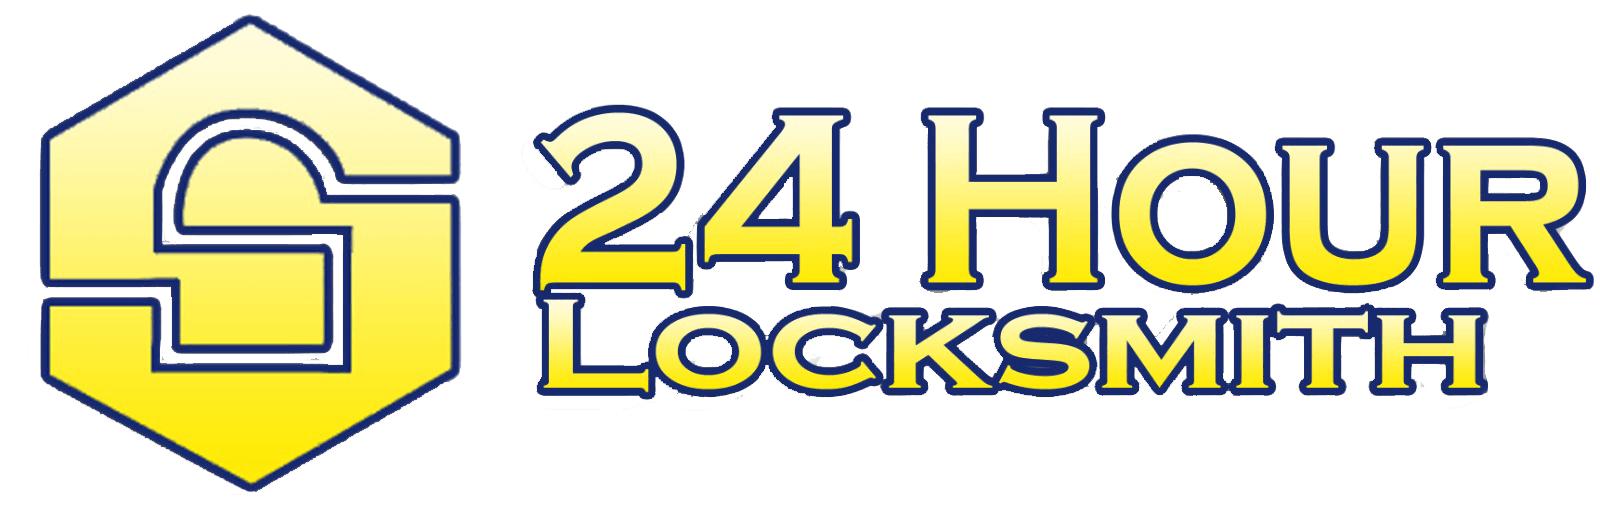 24 Hour Locksmith in Columbus, OH